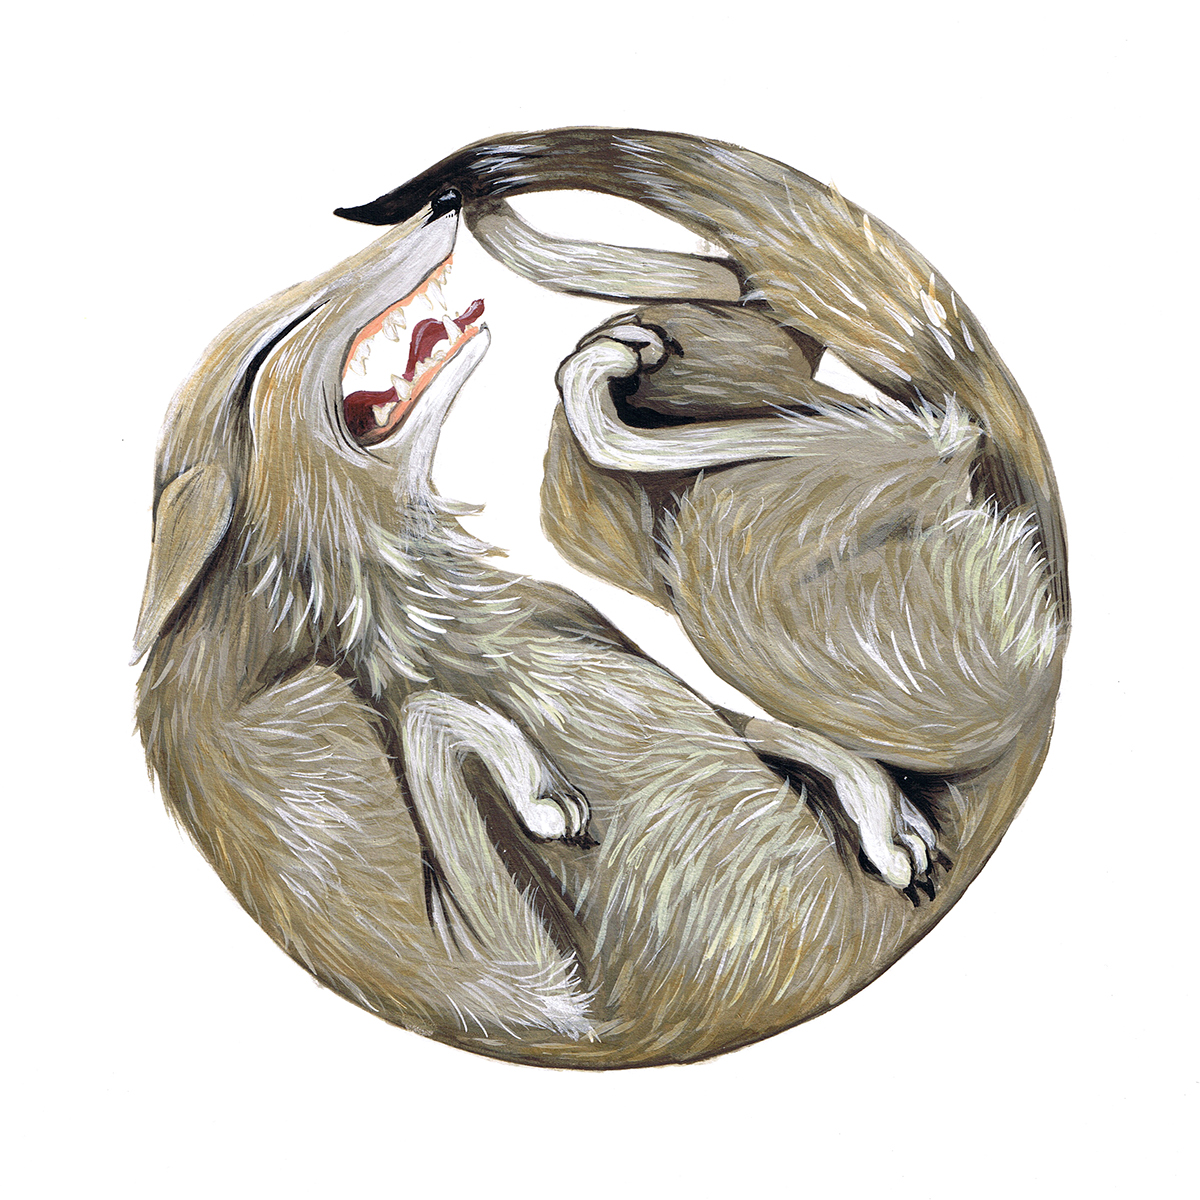 squished animals red fox otter albino deer coyote Round Animals